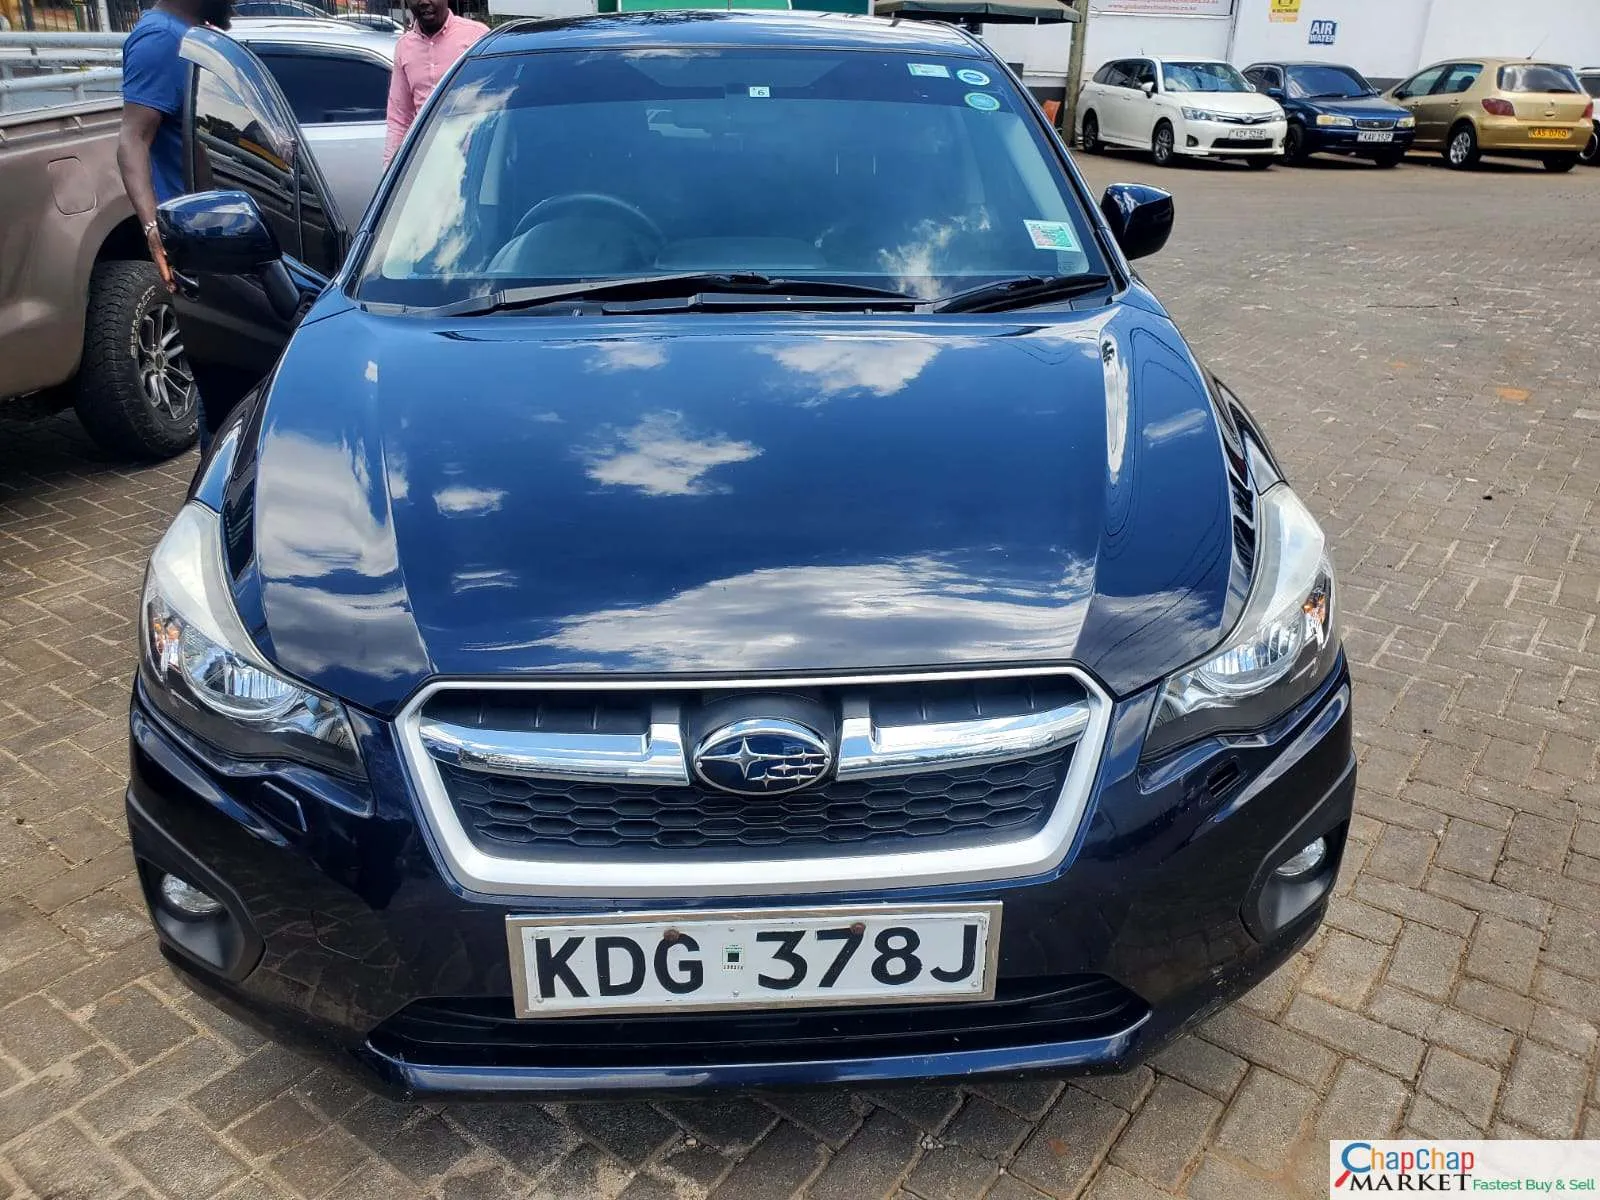 Subaru Impreza G4 QUICK SALE You Pay 30% deposit Trade in Ok Impreza for sale in kenya hire purchase installments EXCLUSIVE